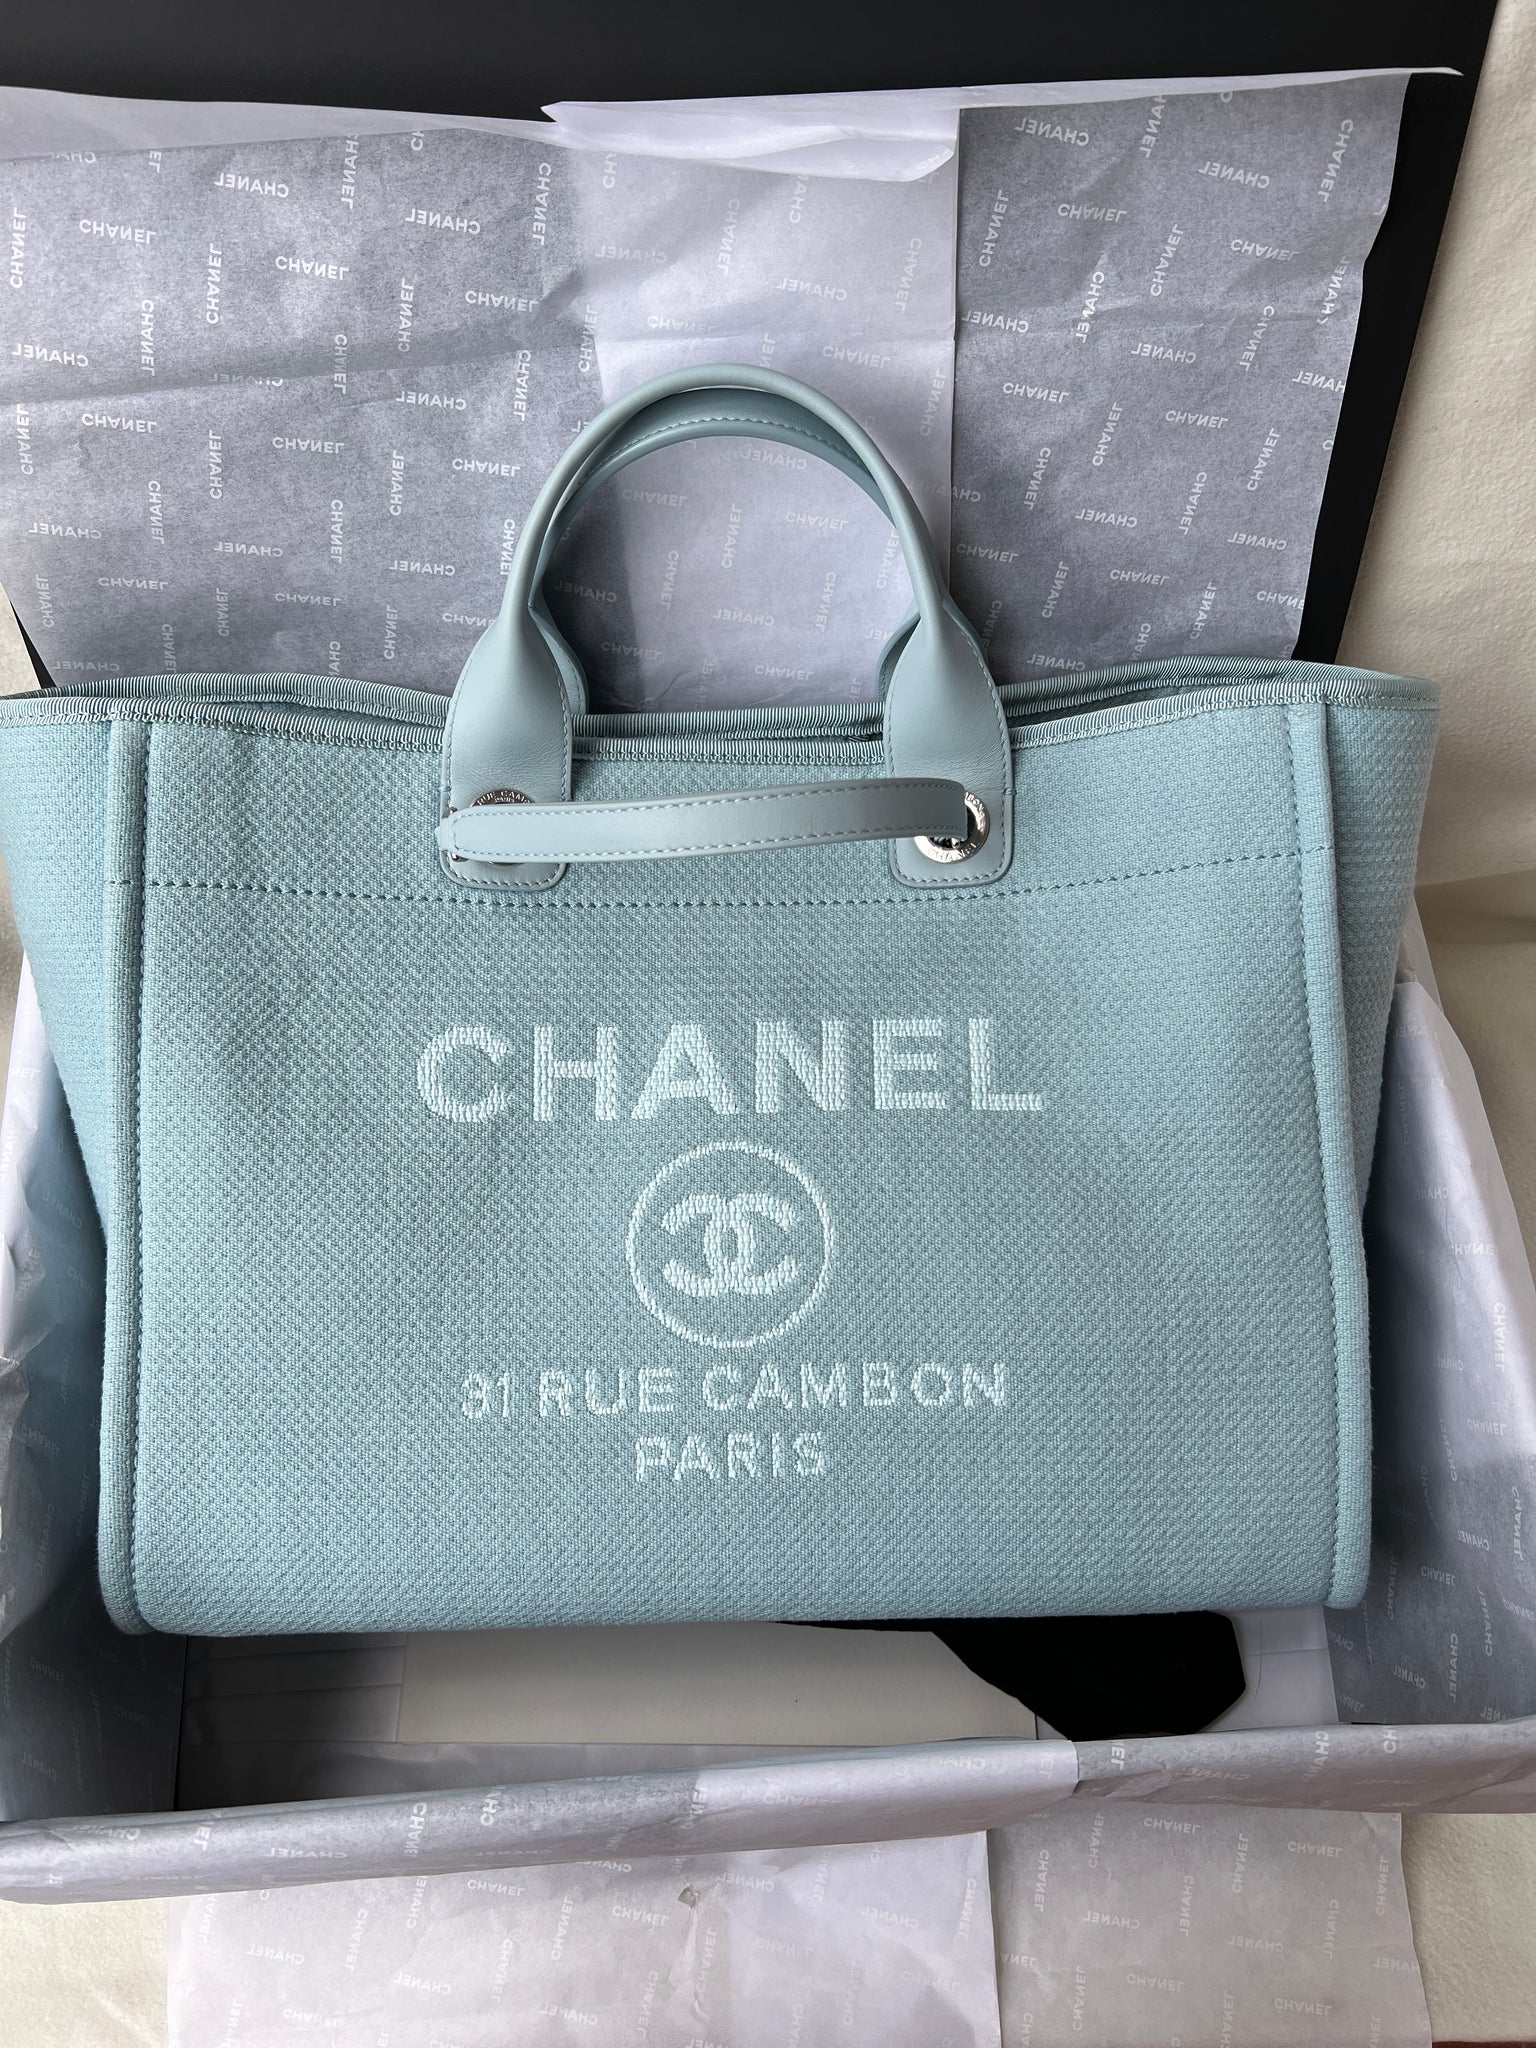 Chanel 2023 Deauville Small Tote Bag